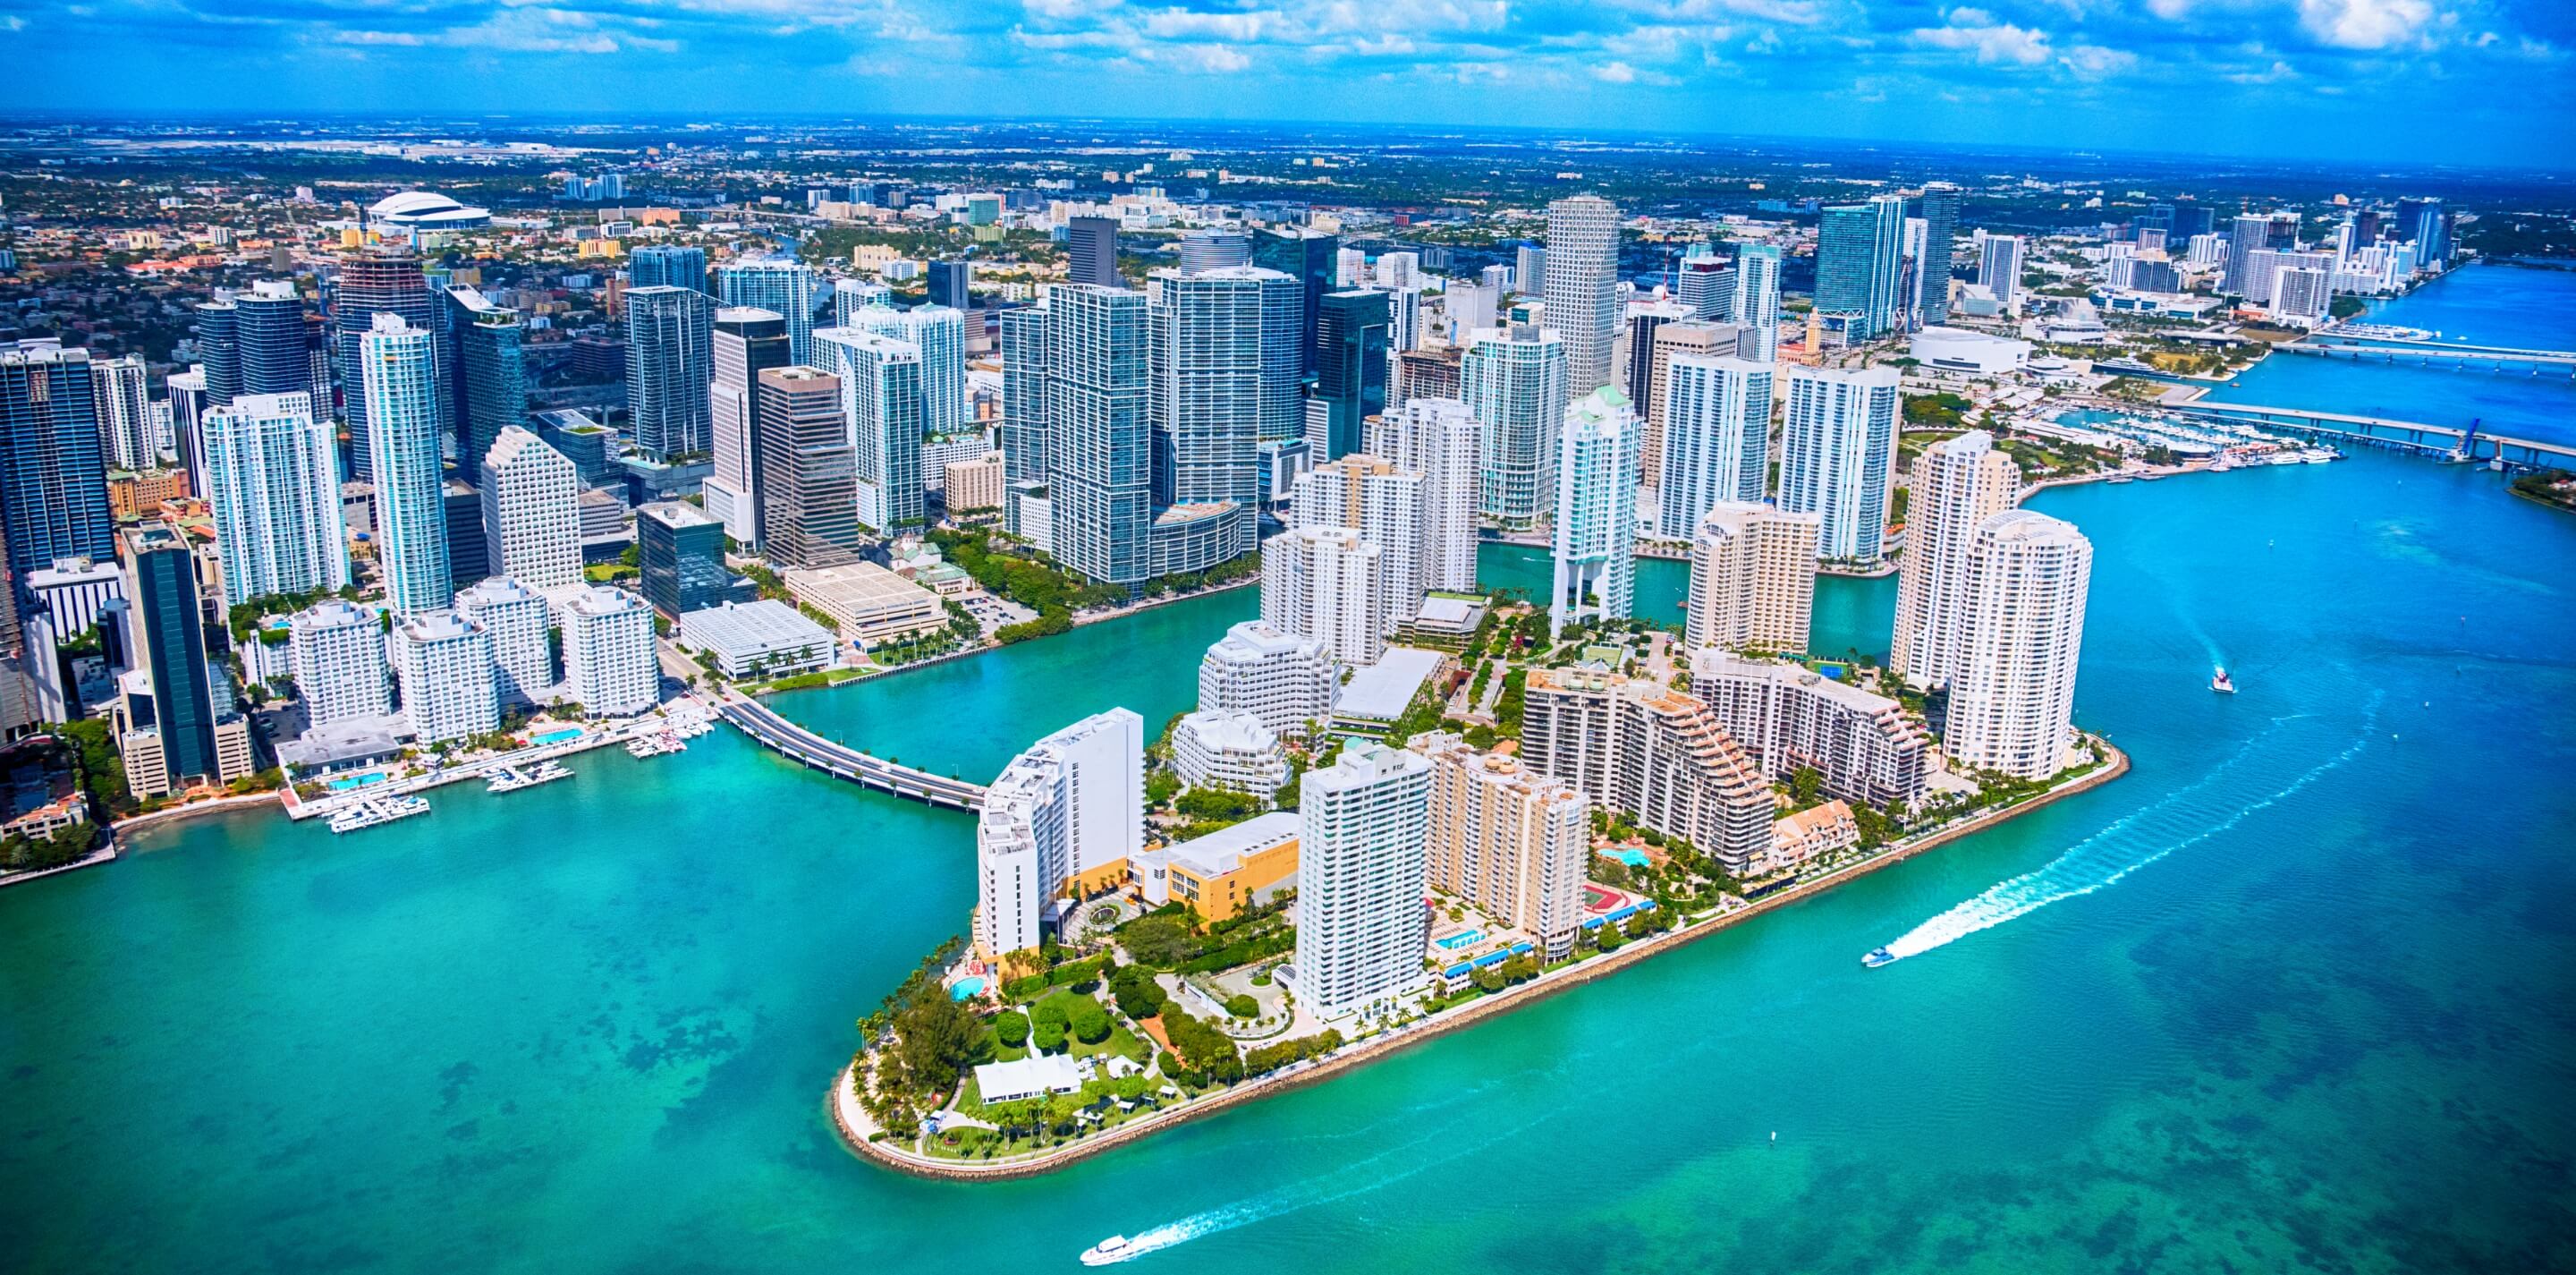 aerial view of a Florida city